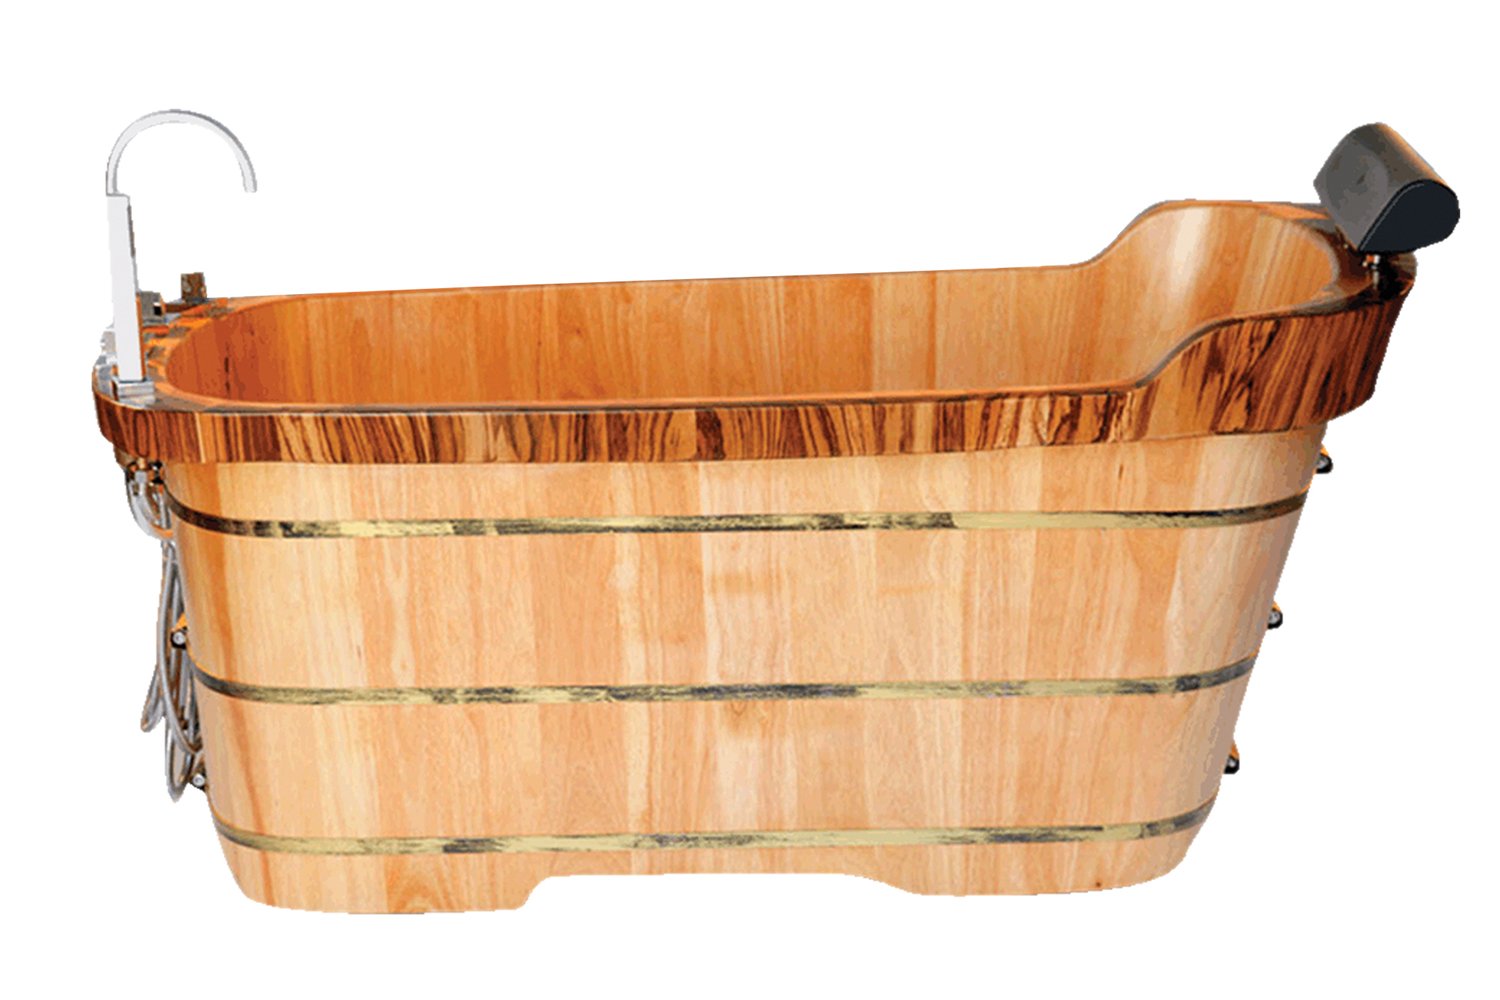 ALFI brand AB1148 59" Free Standing Wooden Bathtub with Chrome Tub Filler